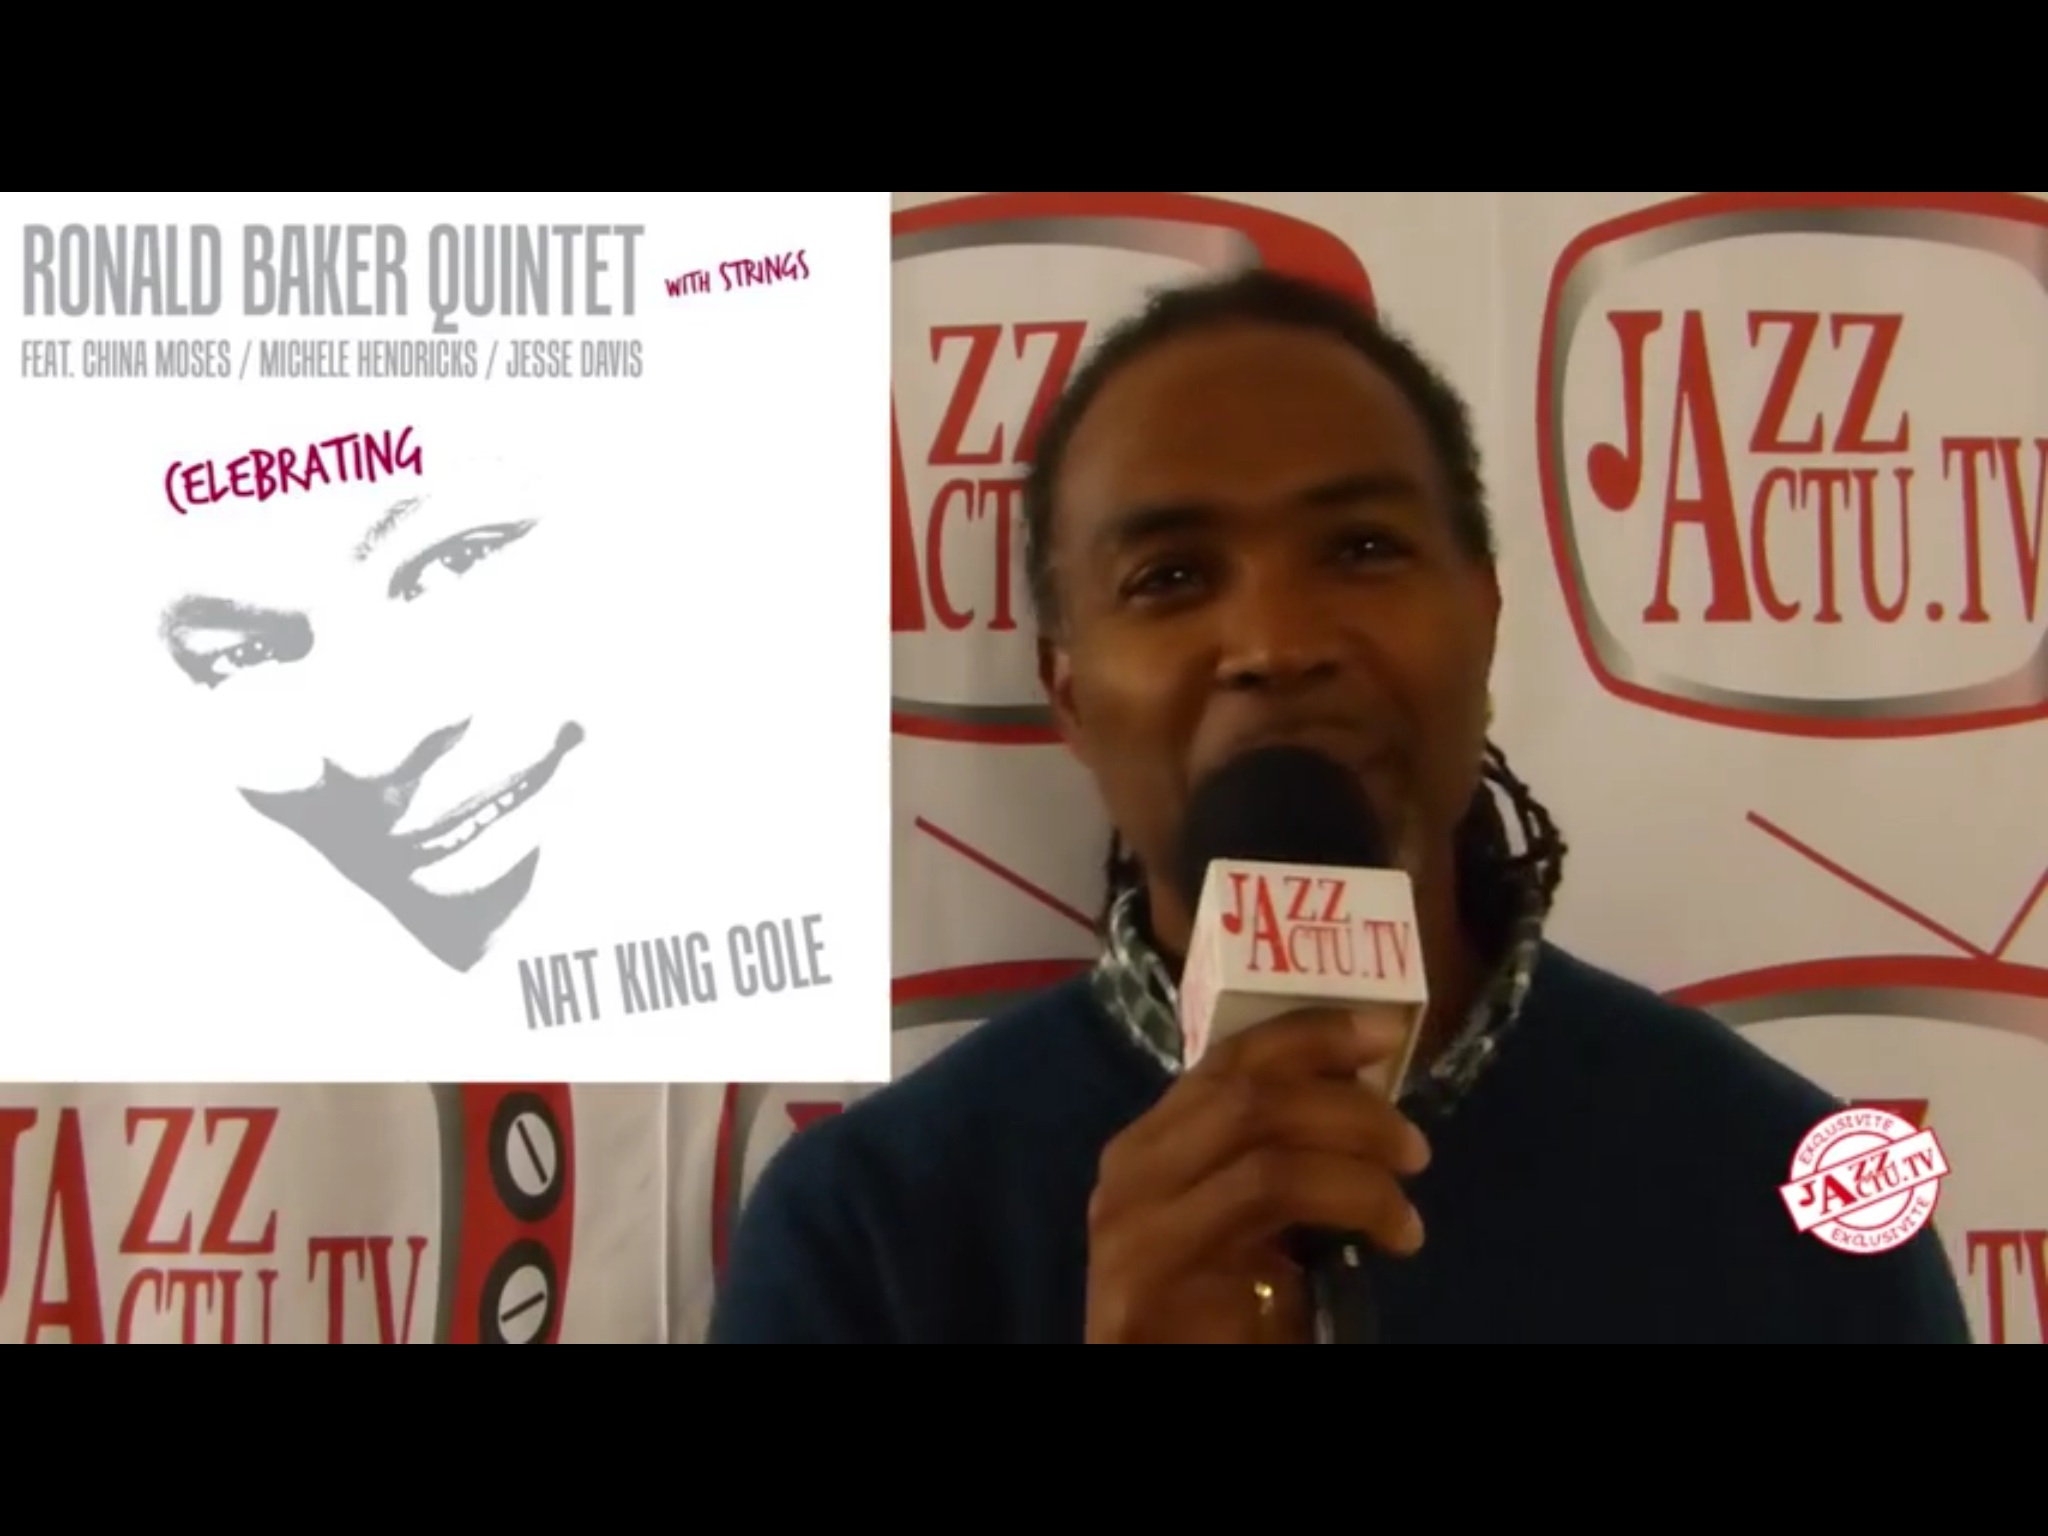 Ronald Baker on Jazzactu.tv